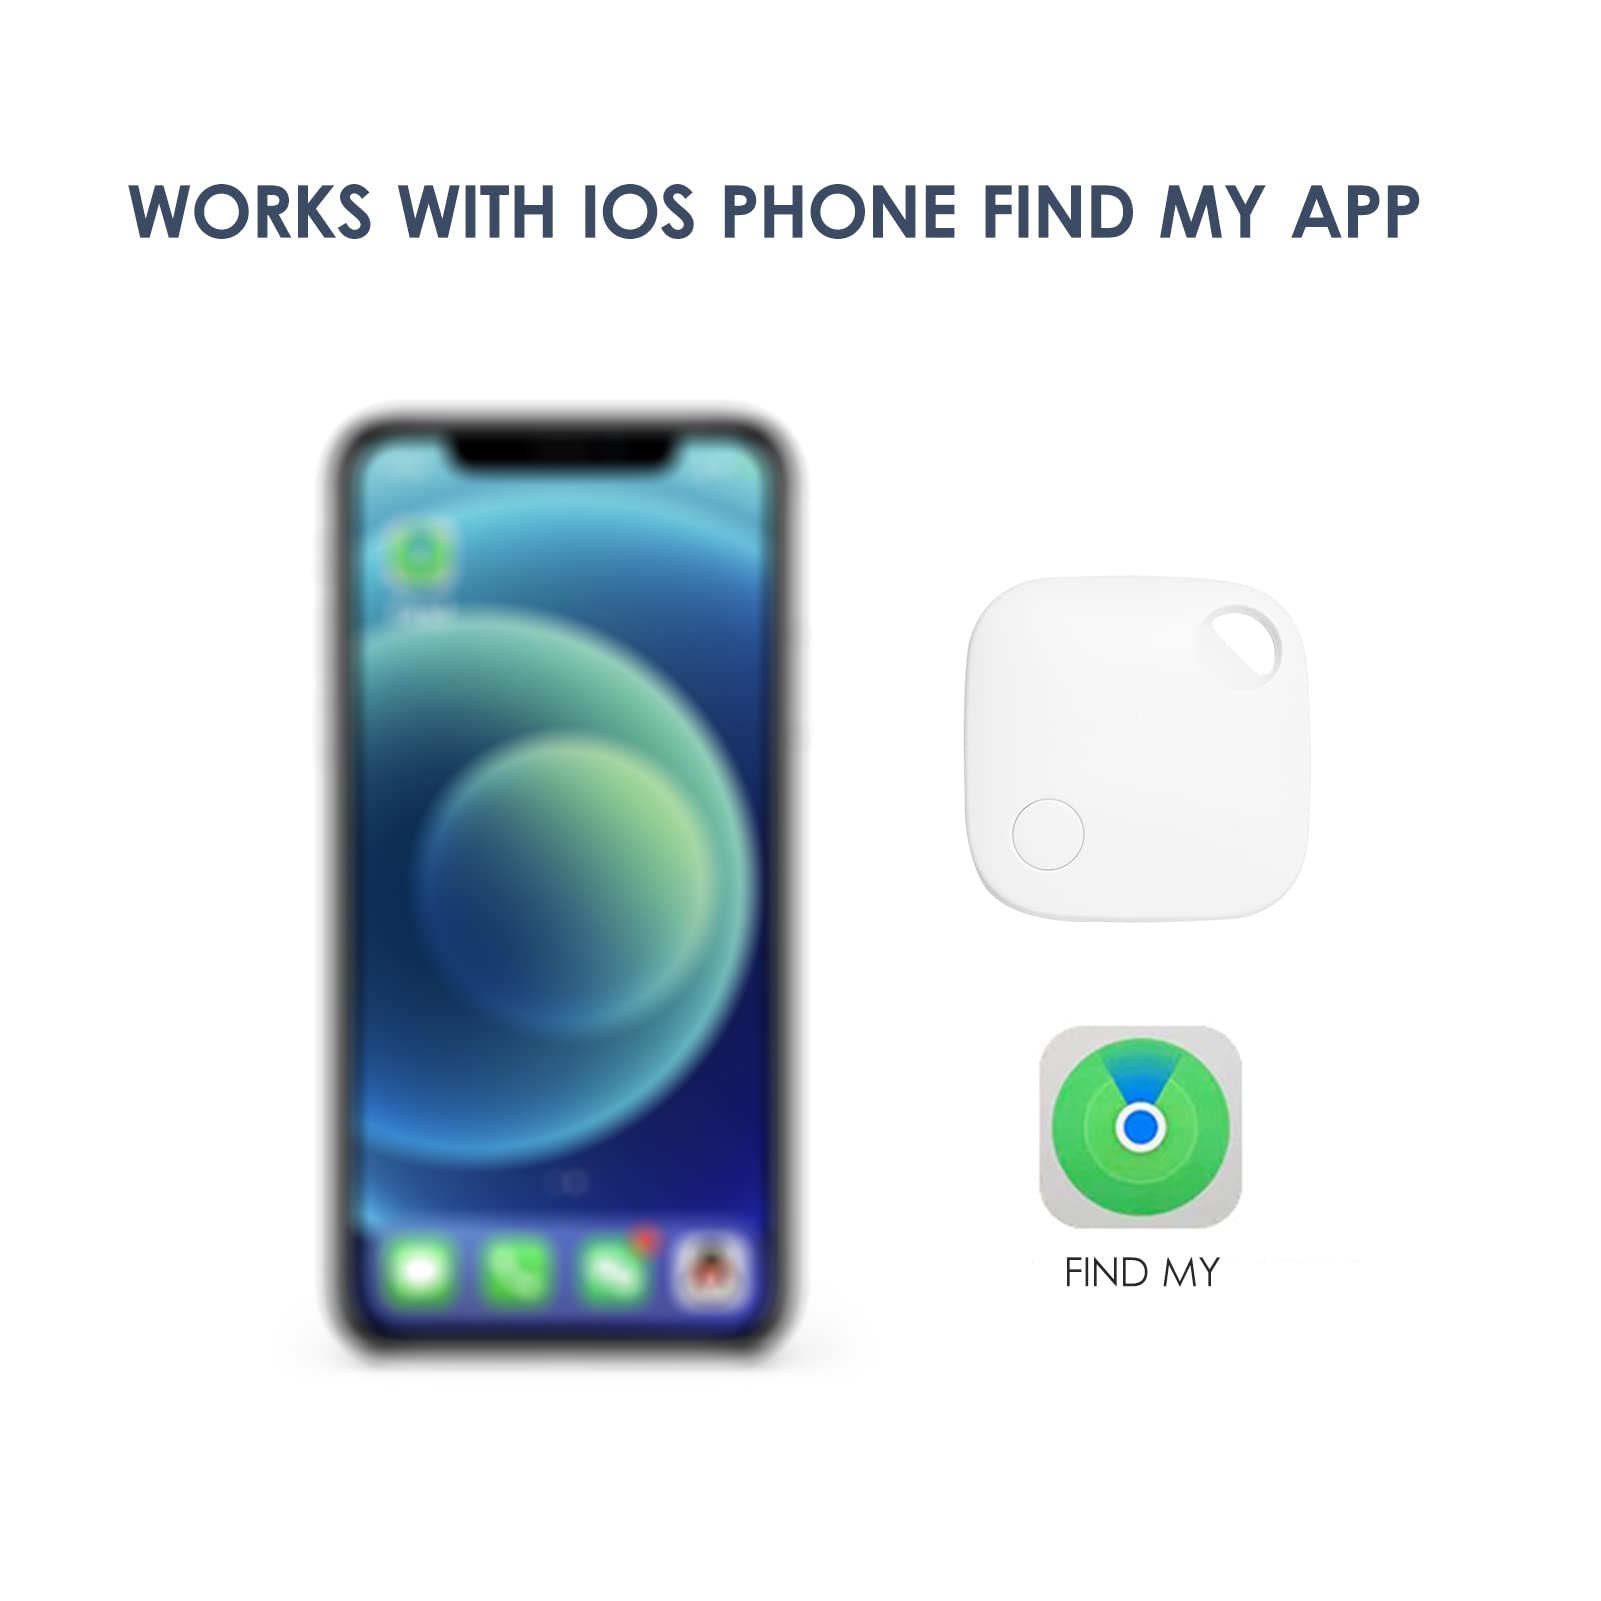 ERYUE GPS Locator, Smart Air Tag Smartphone Finder BT Locator for iOS Phone iOS Pad iOS MP3